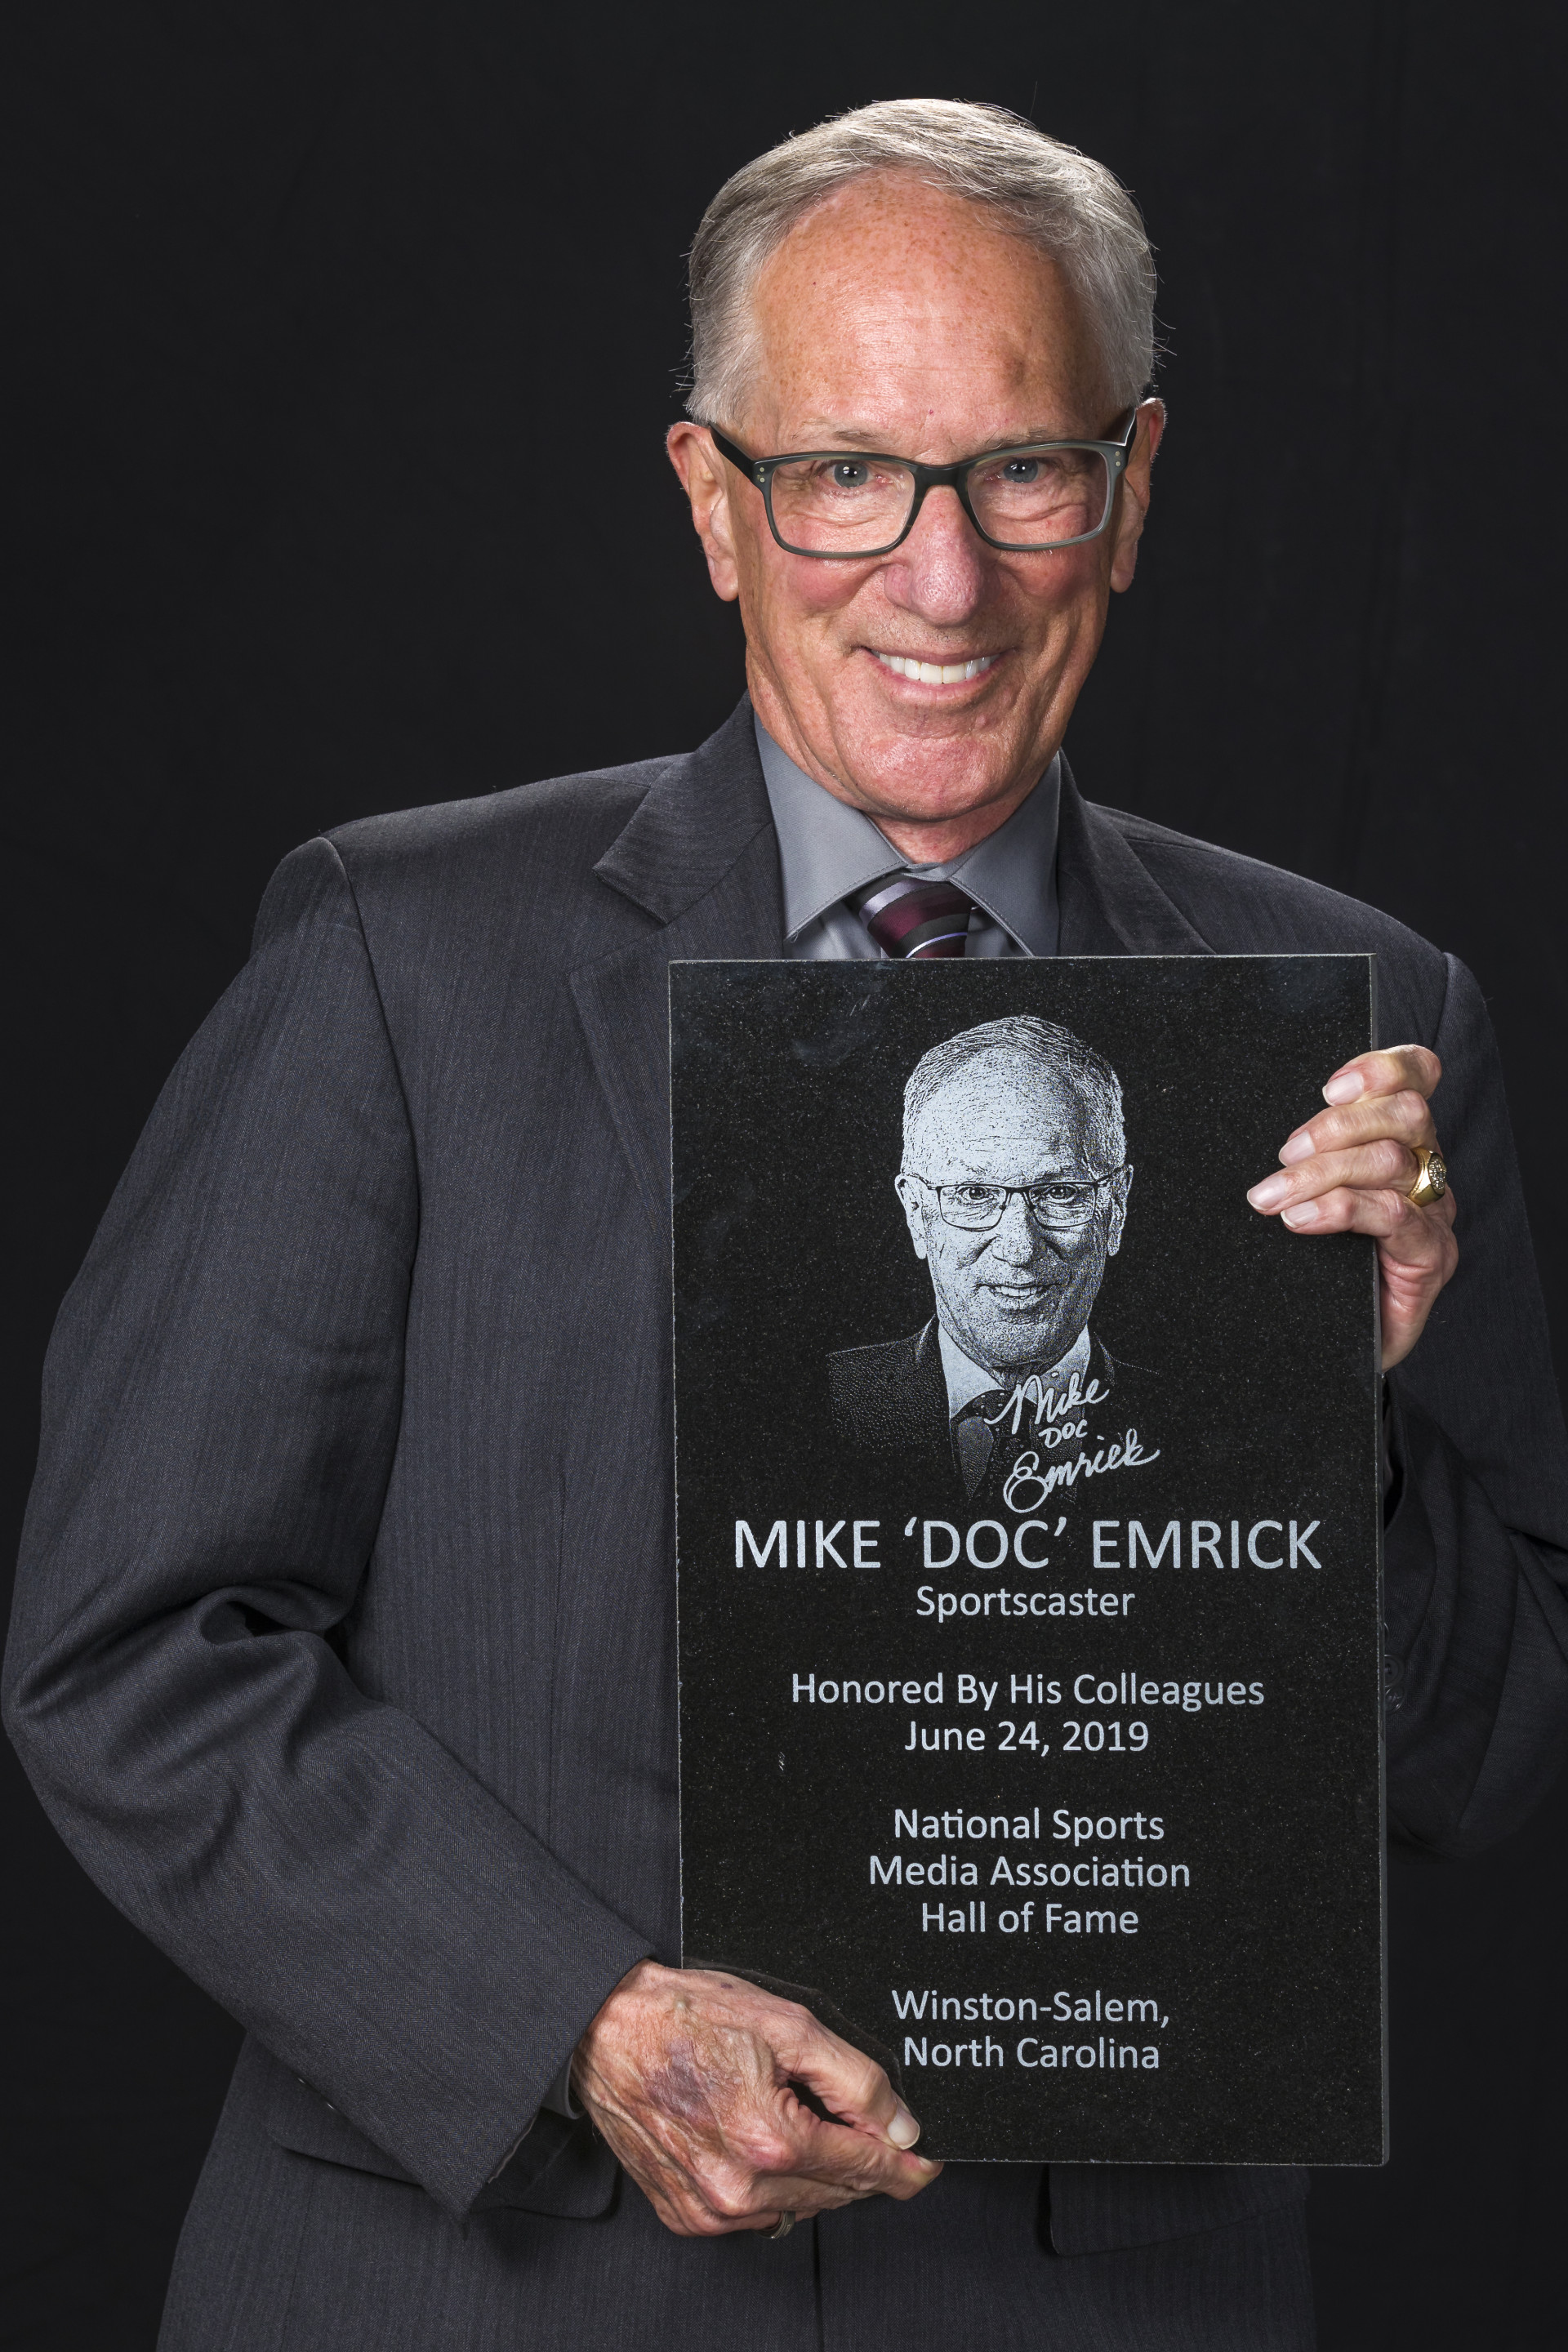 Mike 'Doc' Emrick